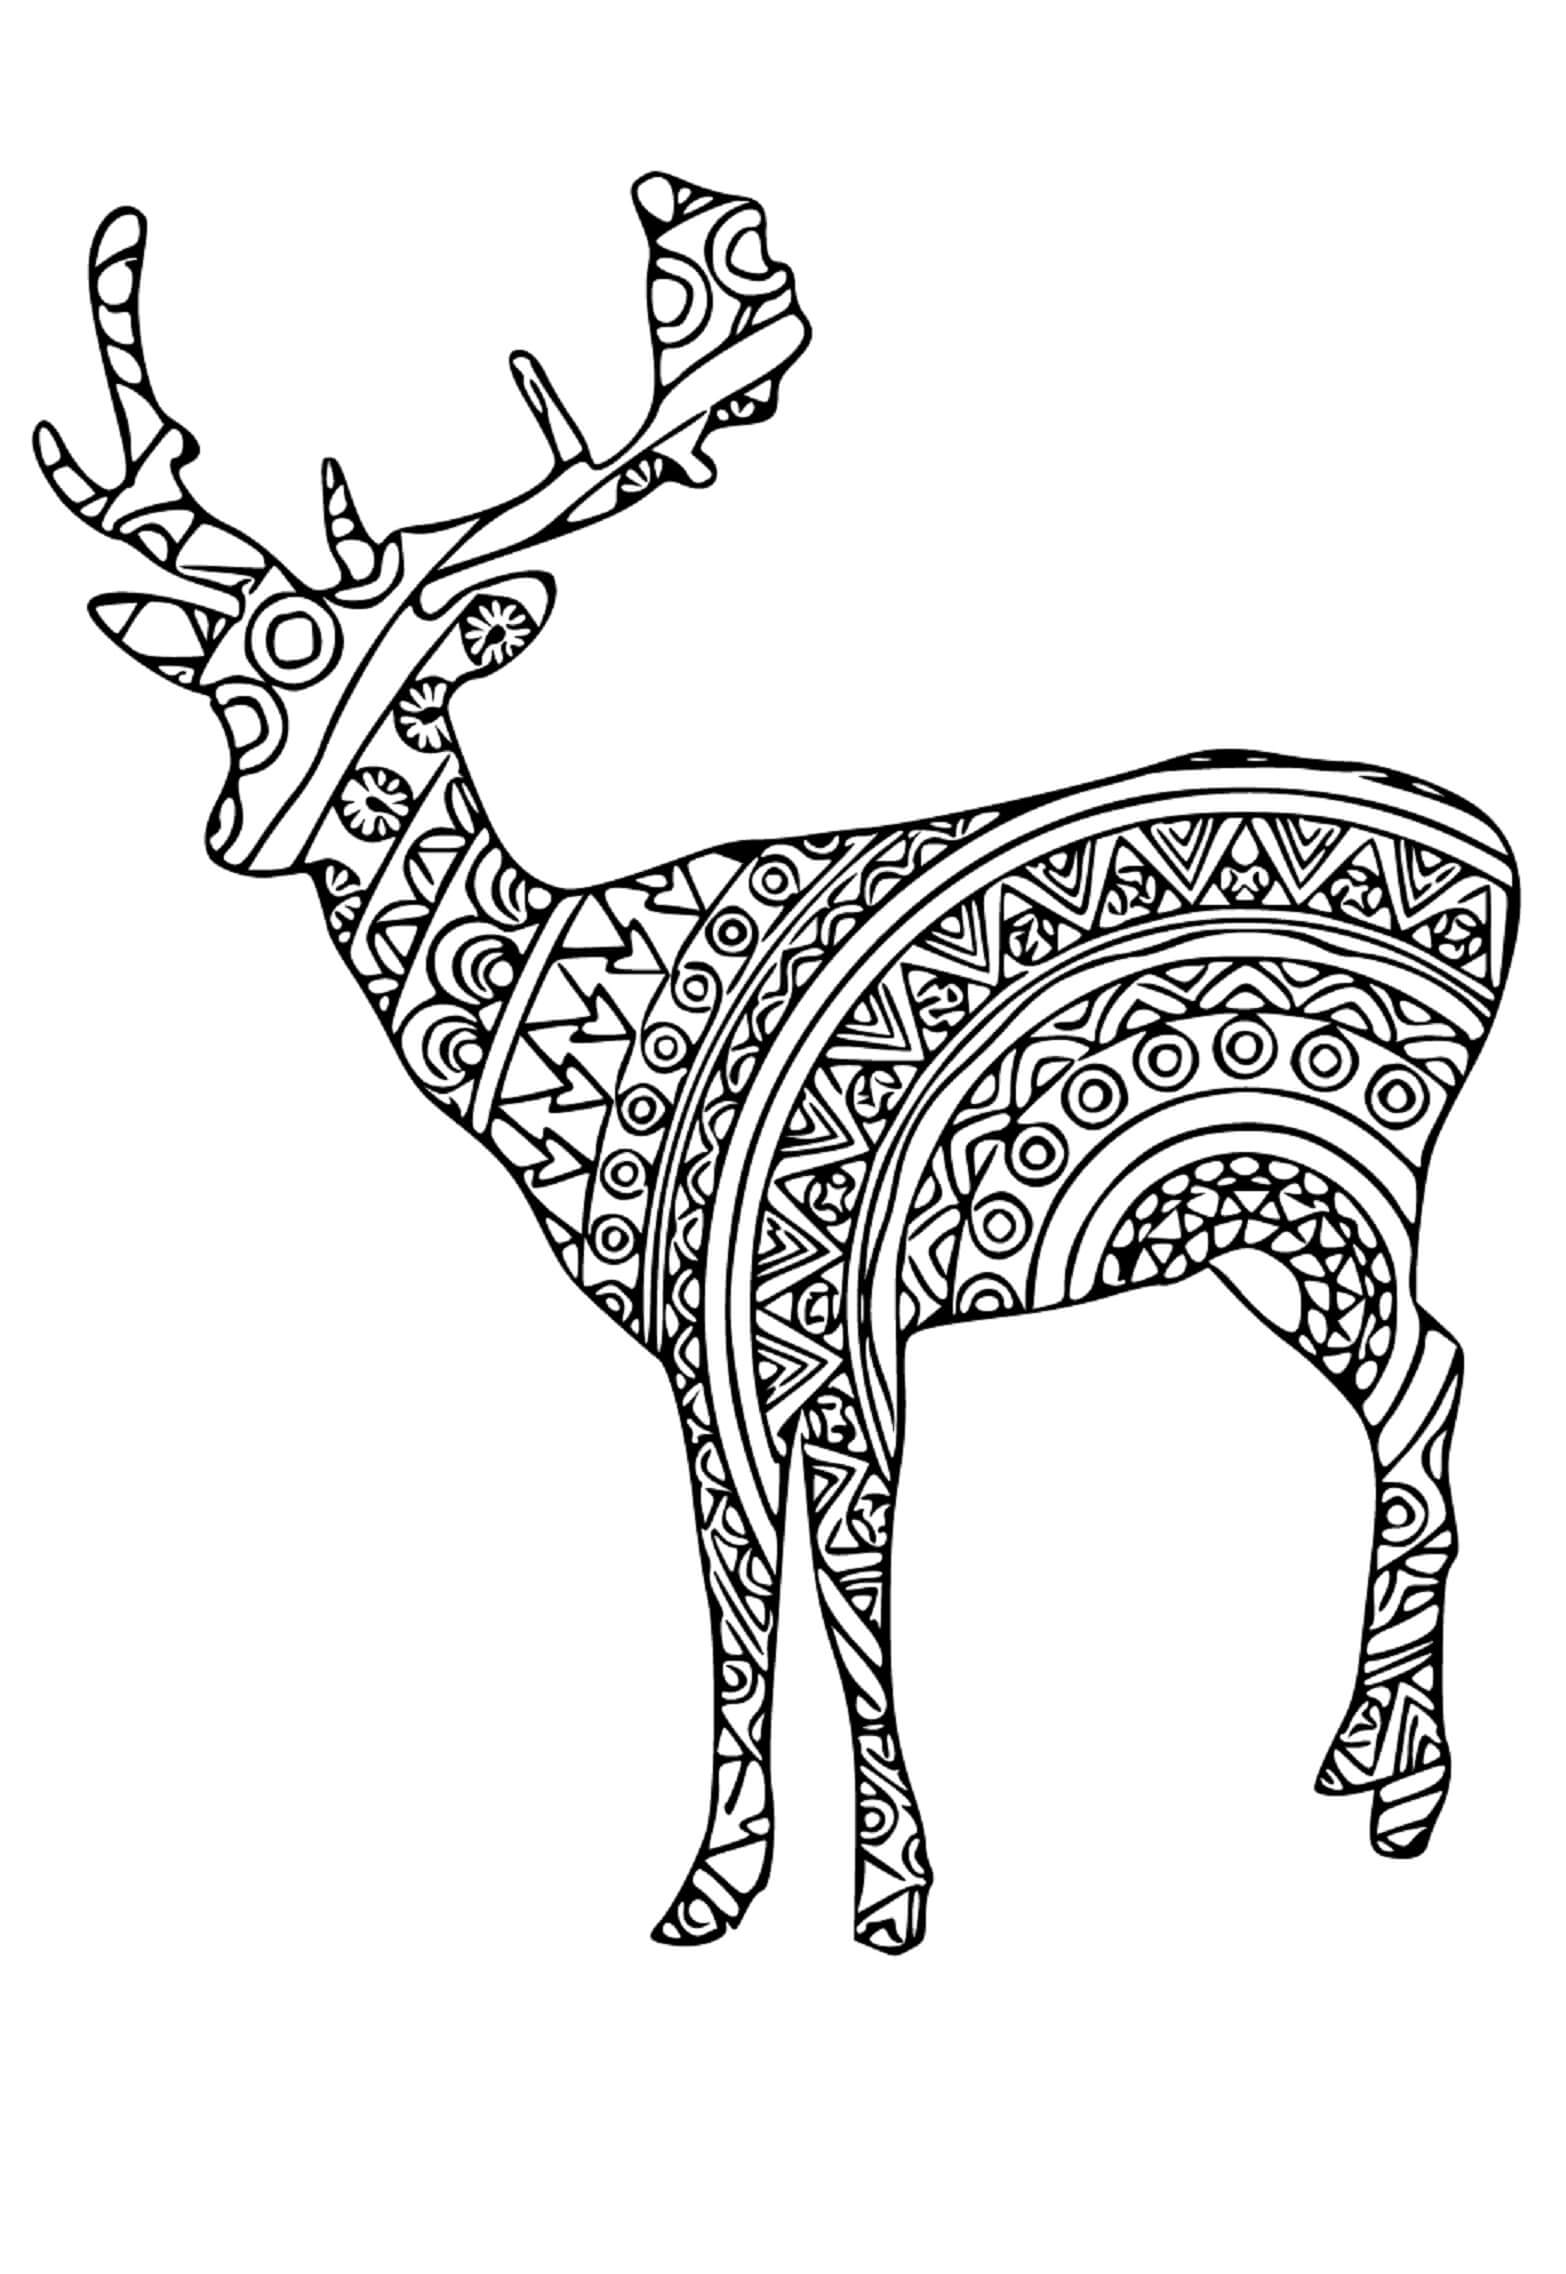 Mandala Deer Coloring Page – Sheet 5 Mandala